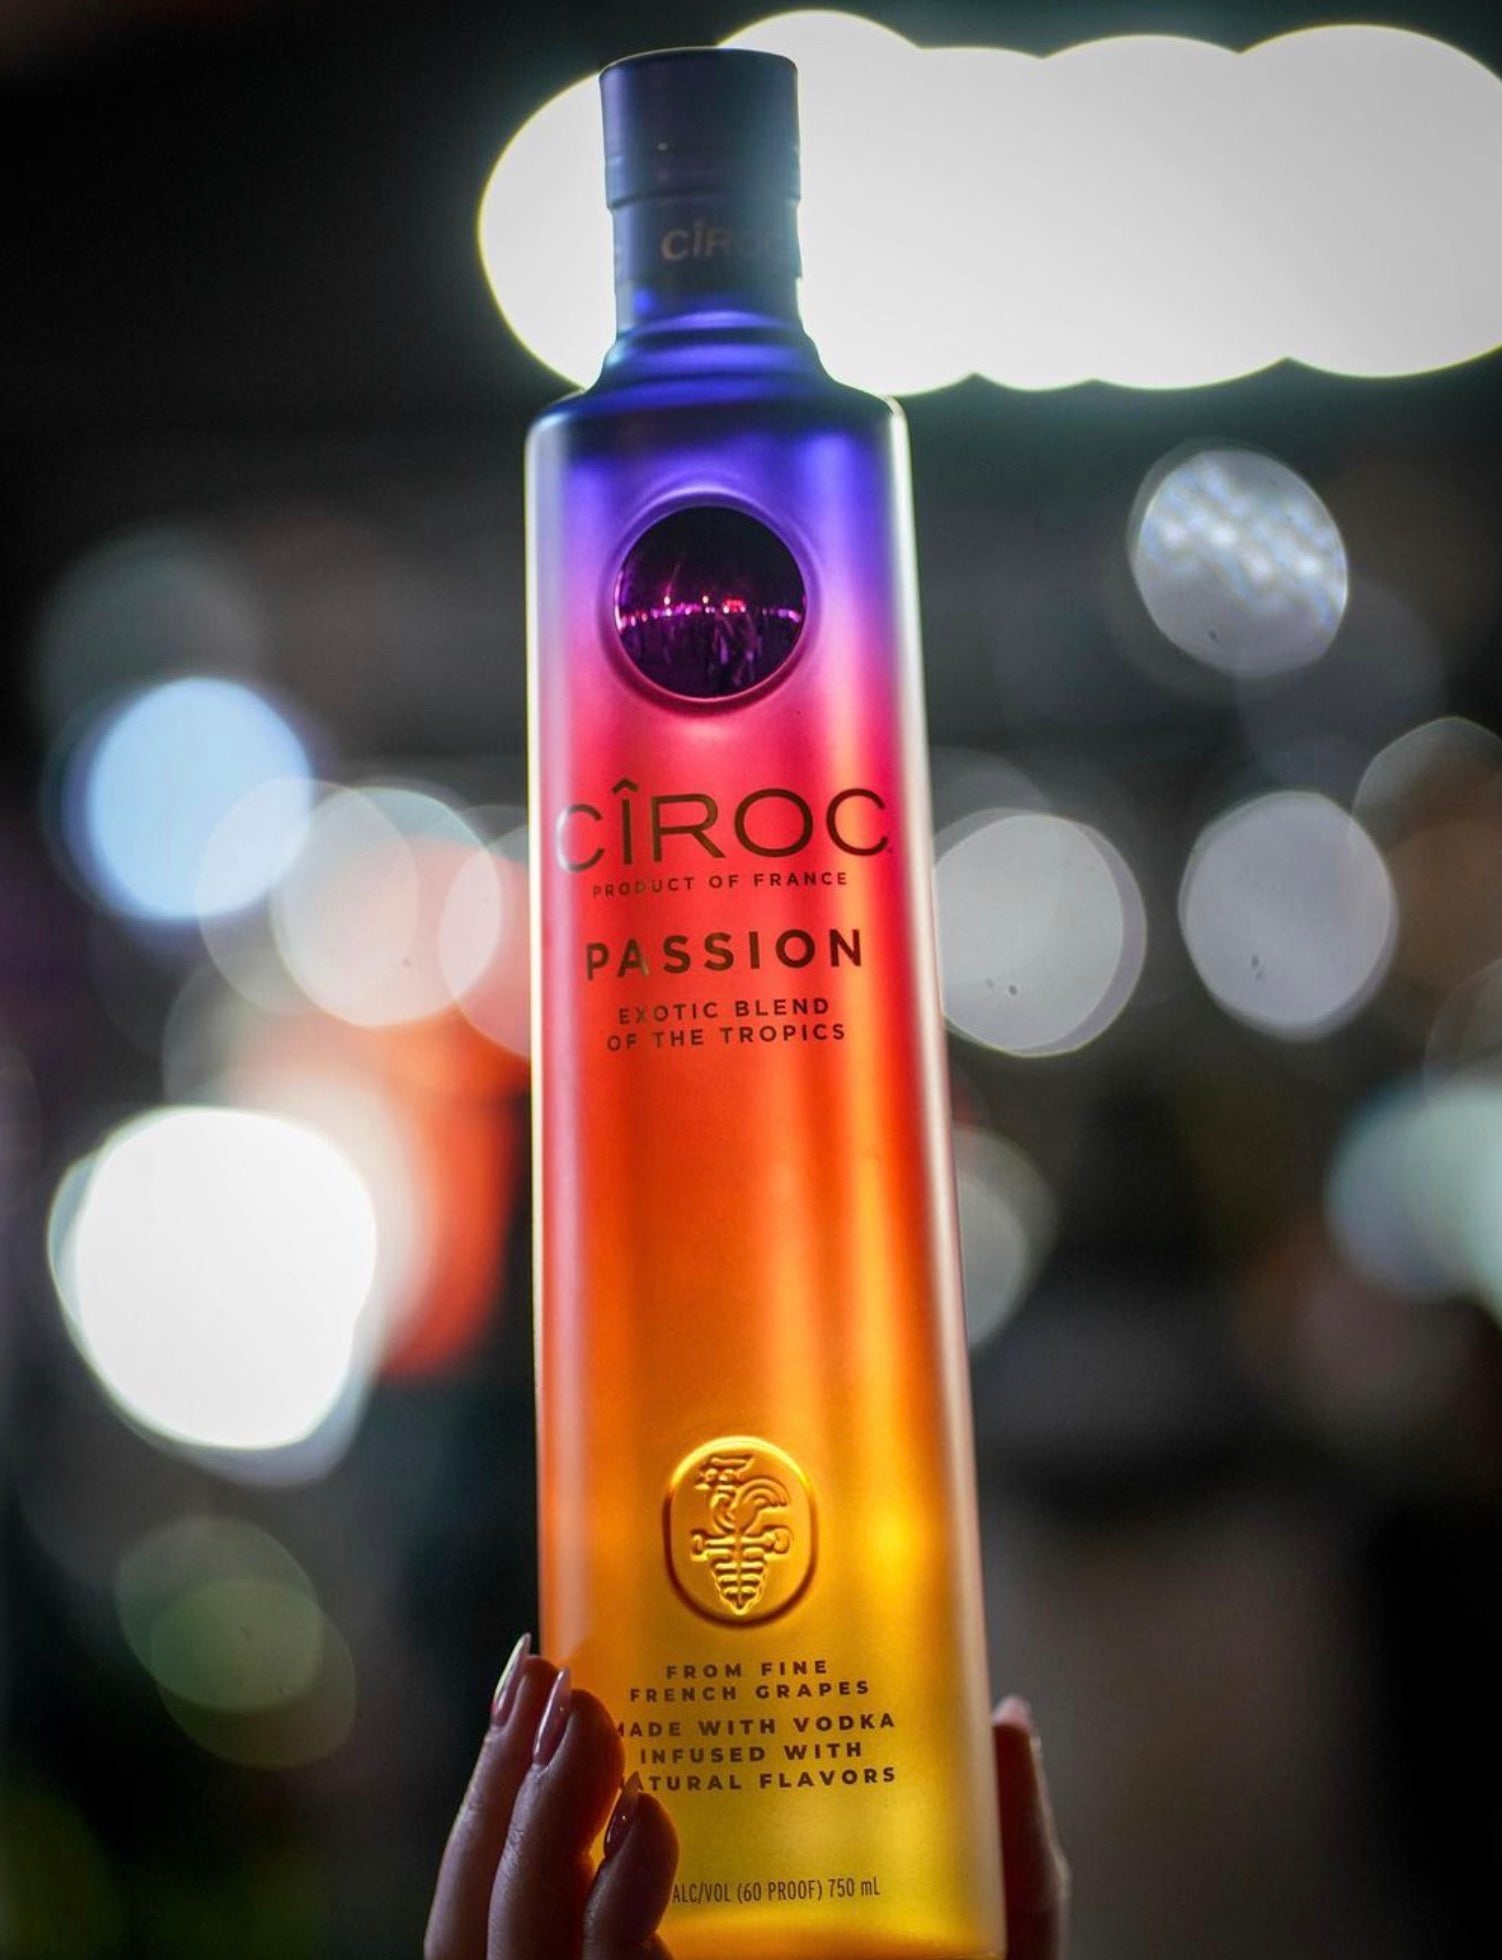 Ciroc Passion Vodka Limited Edition